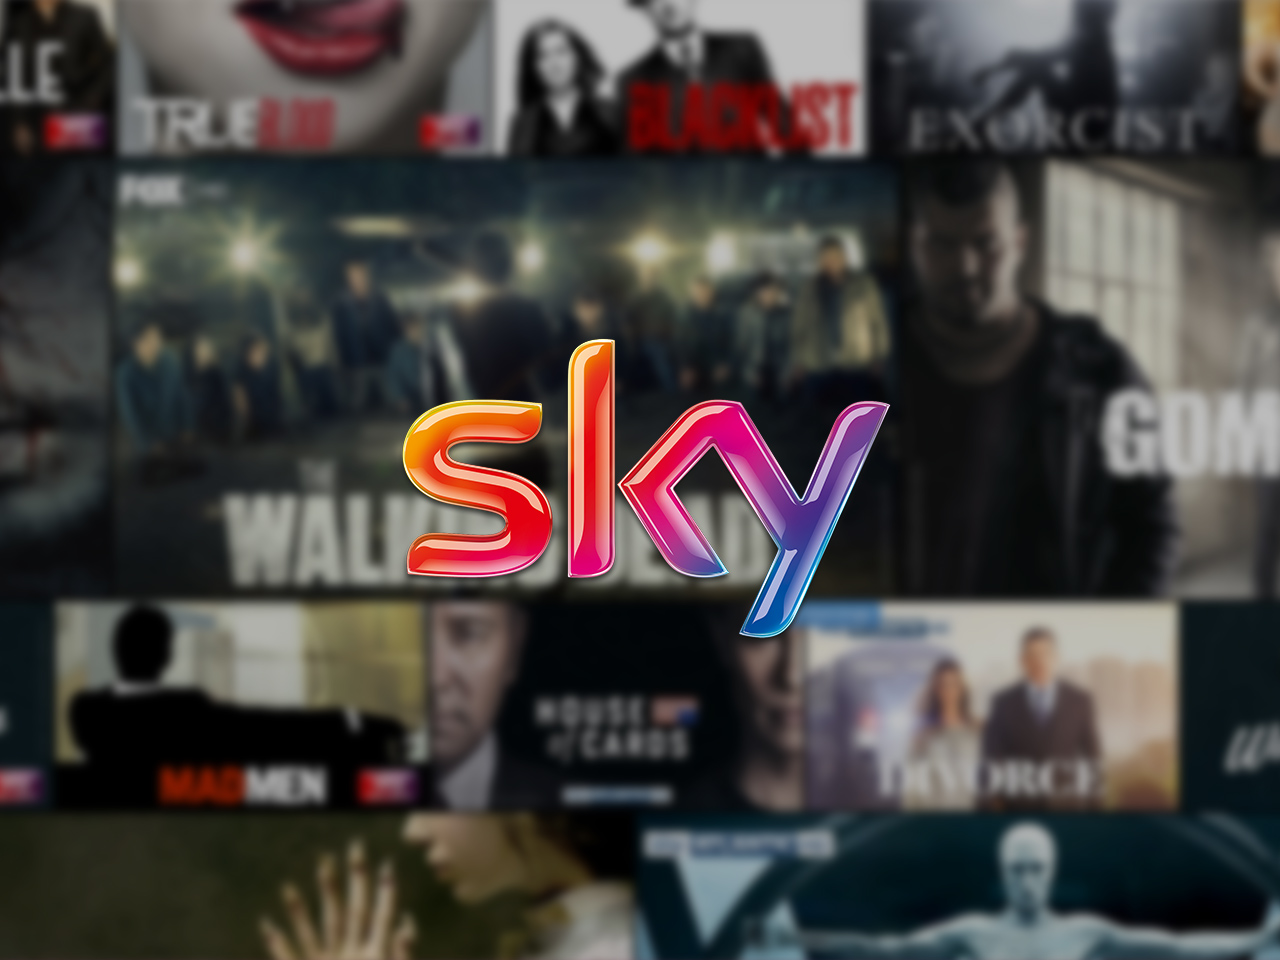 Sky Serie TV Digital Hub Logicweb